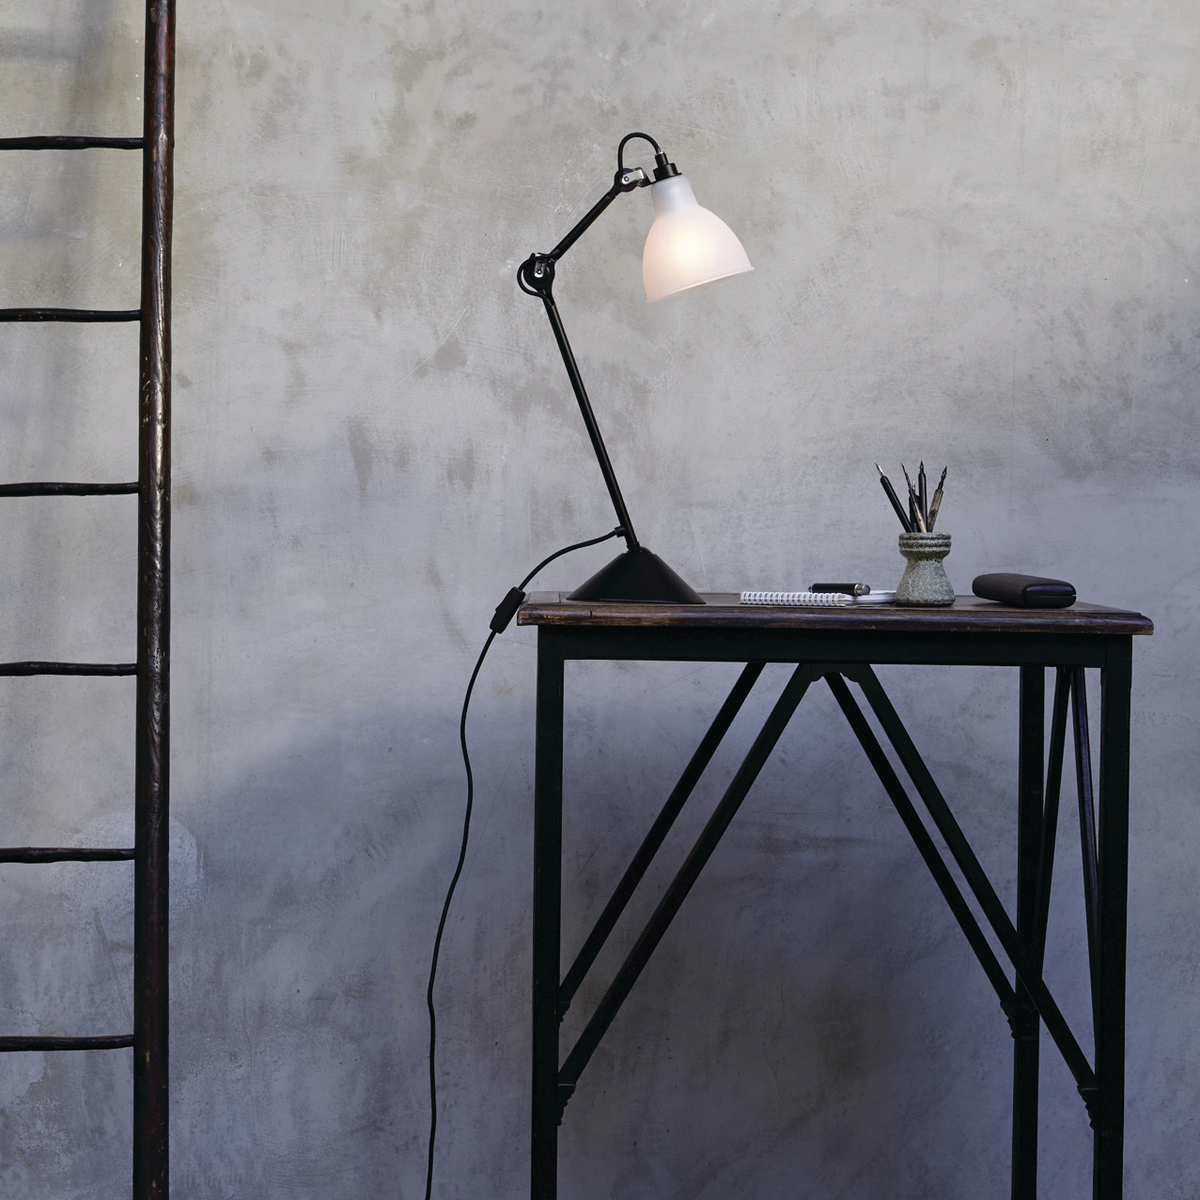 Black desk lamp on small wooden desk against grey concrete background.